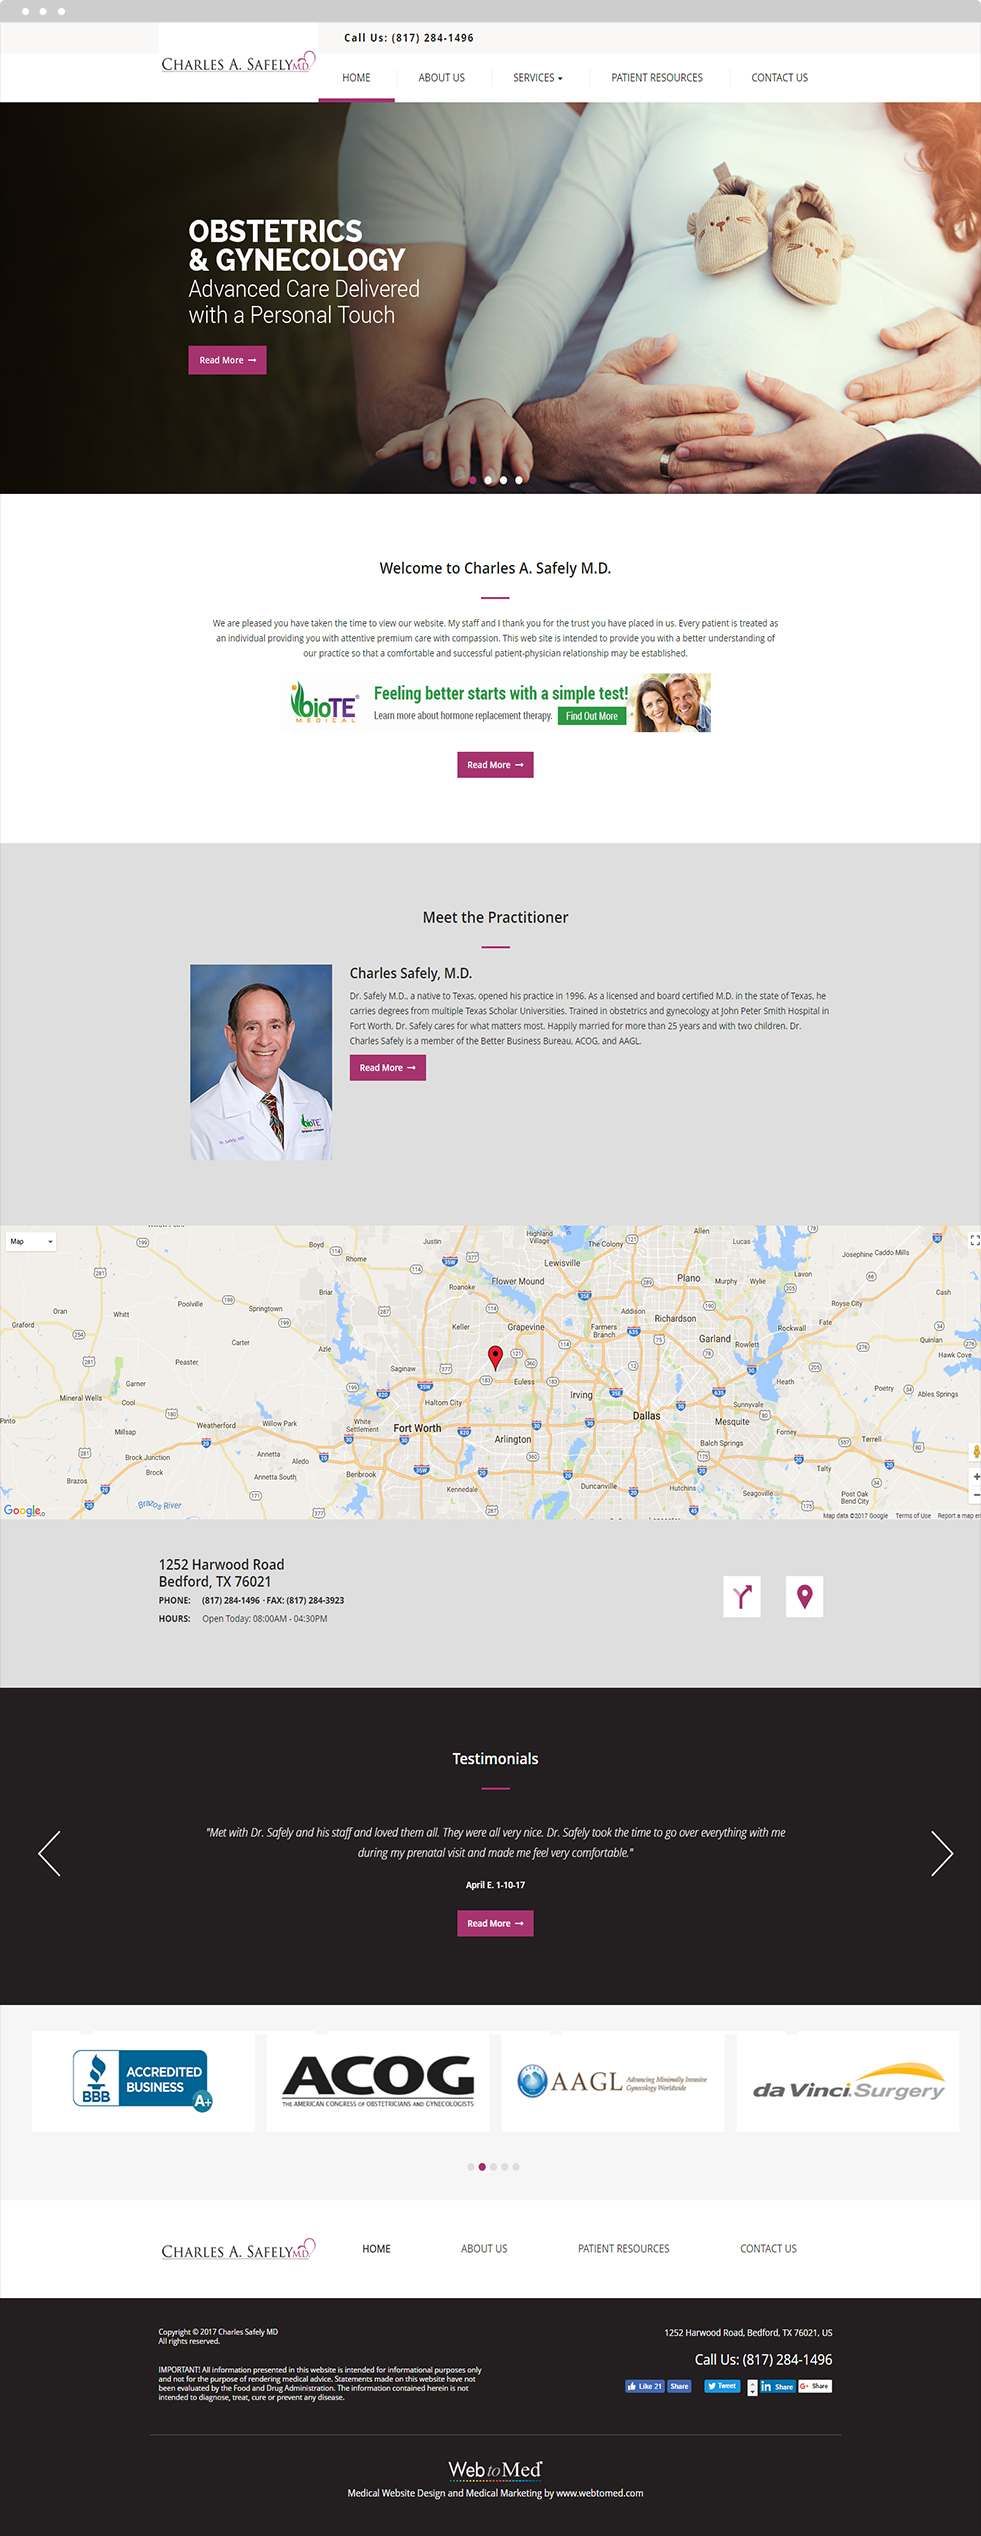 OBGYN Website Design - Charles Safely, MD - Homepage